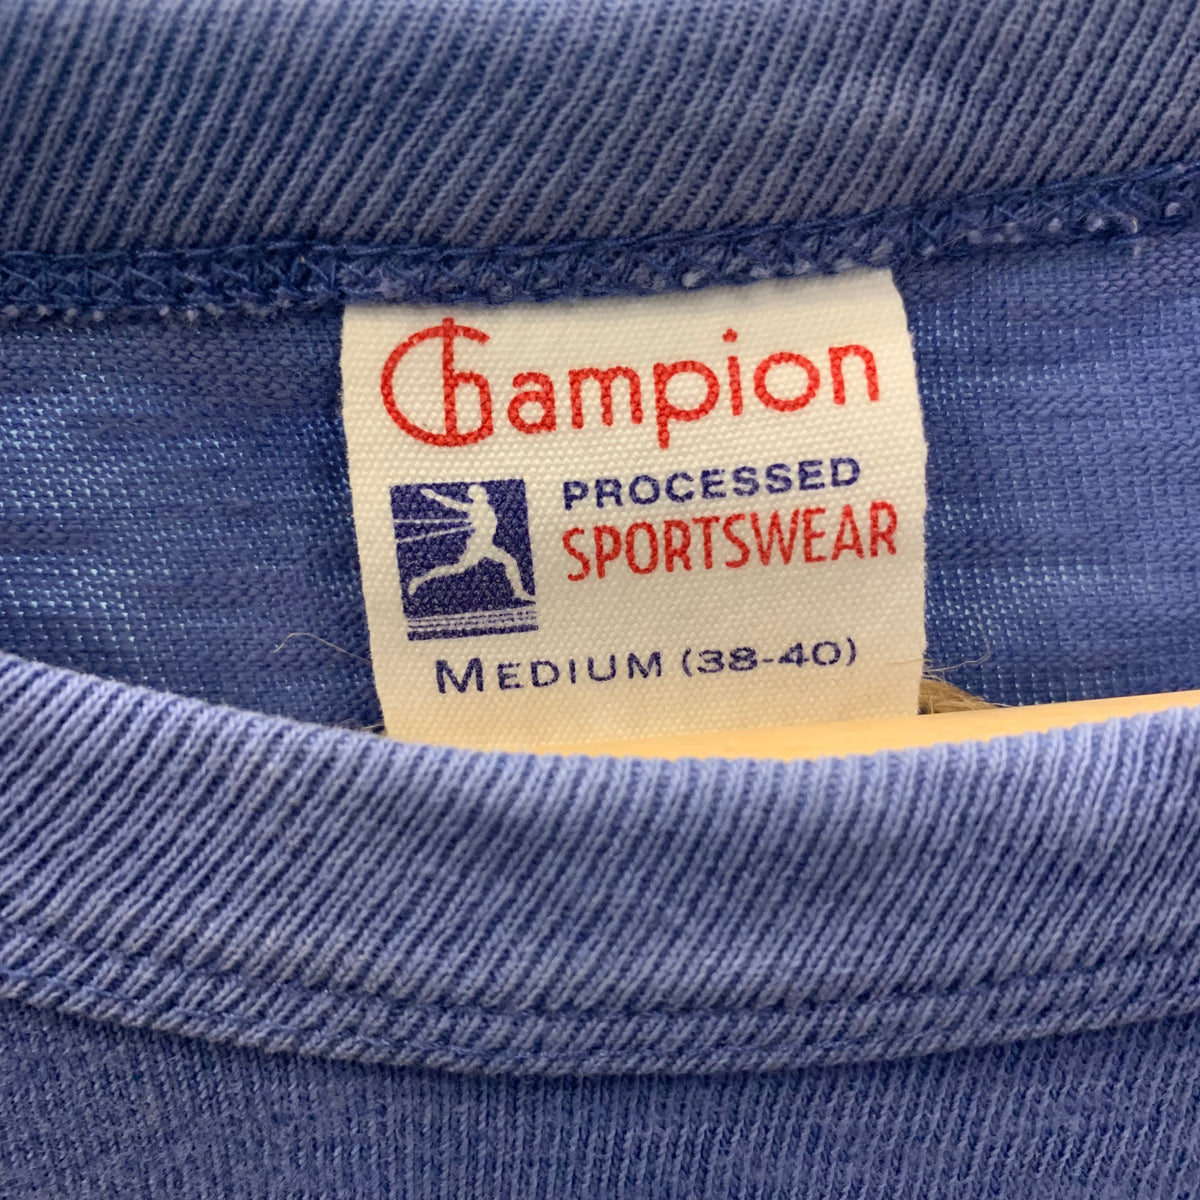 champion processed sportswear